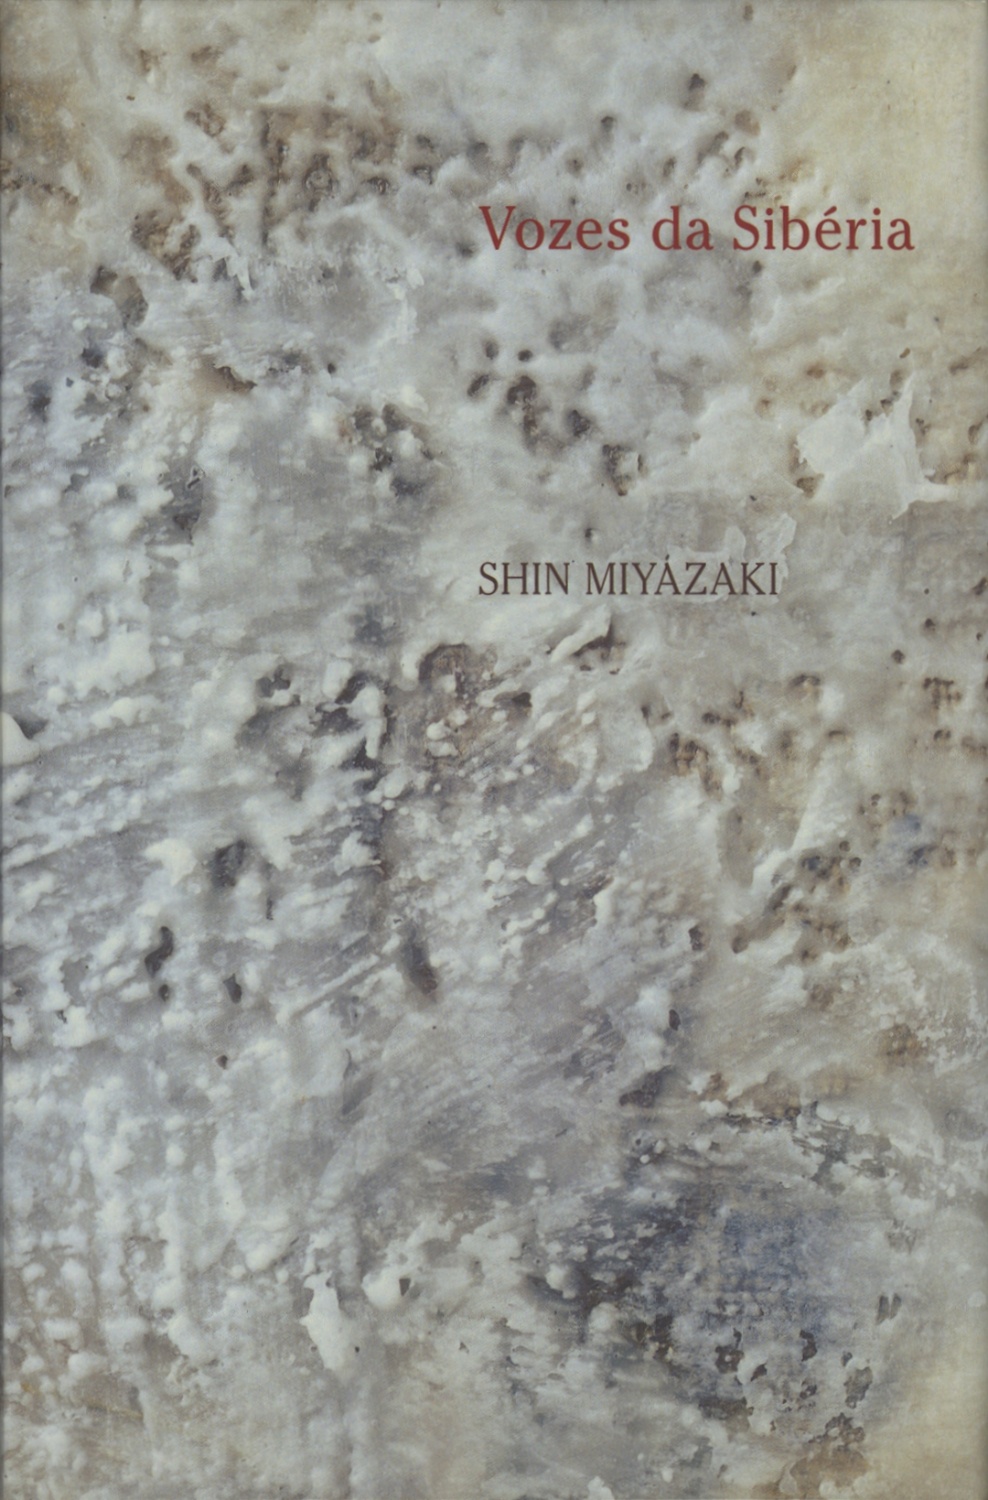 Vozes da Siberia / Voice of Shiberia　SHIN MIYAZAKI／XXVI Bienal Internacional de Sao Paulo 2004 Japao